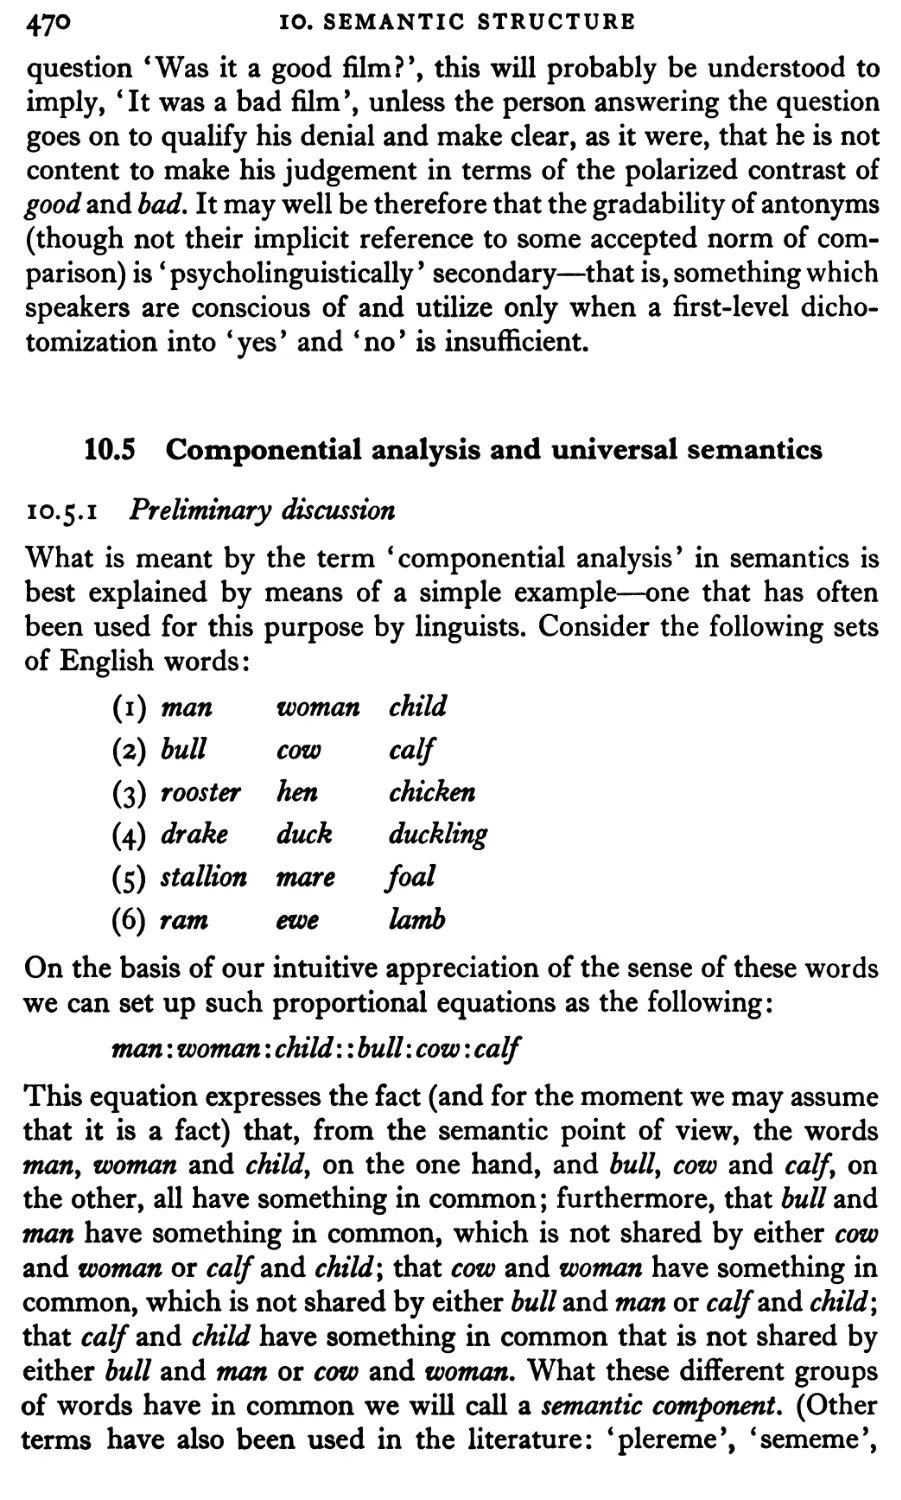 10.5 Componential analysis and universal semantics